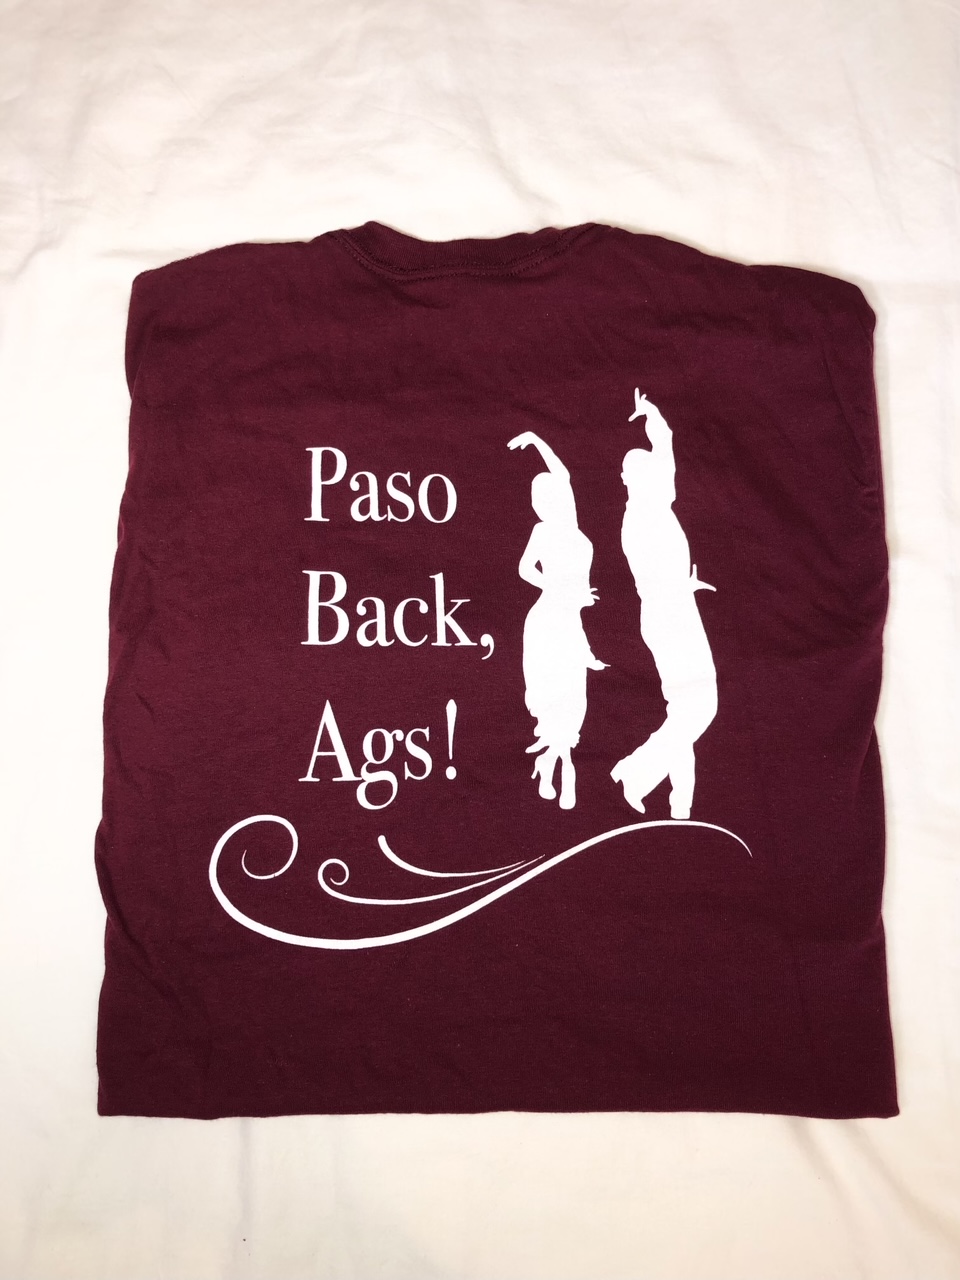 TAMBDA New Paso Back T-shirt